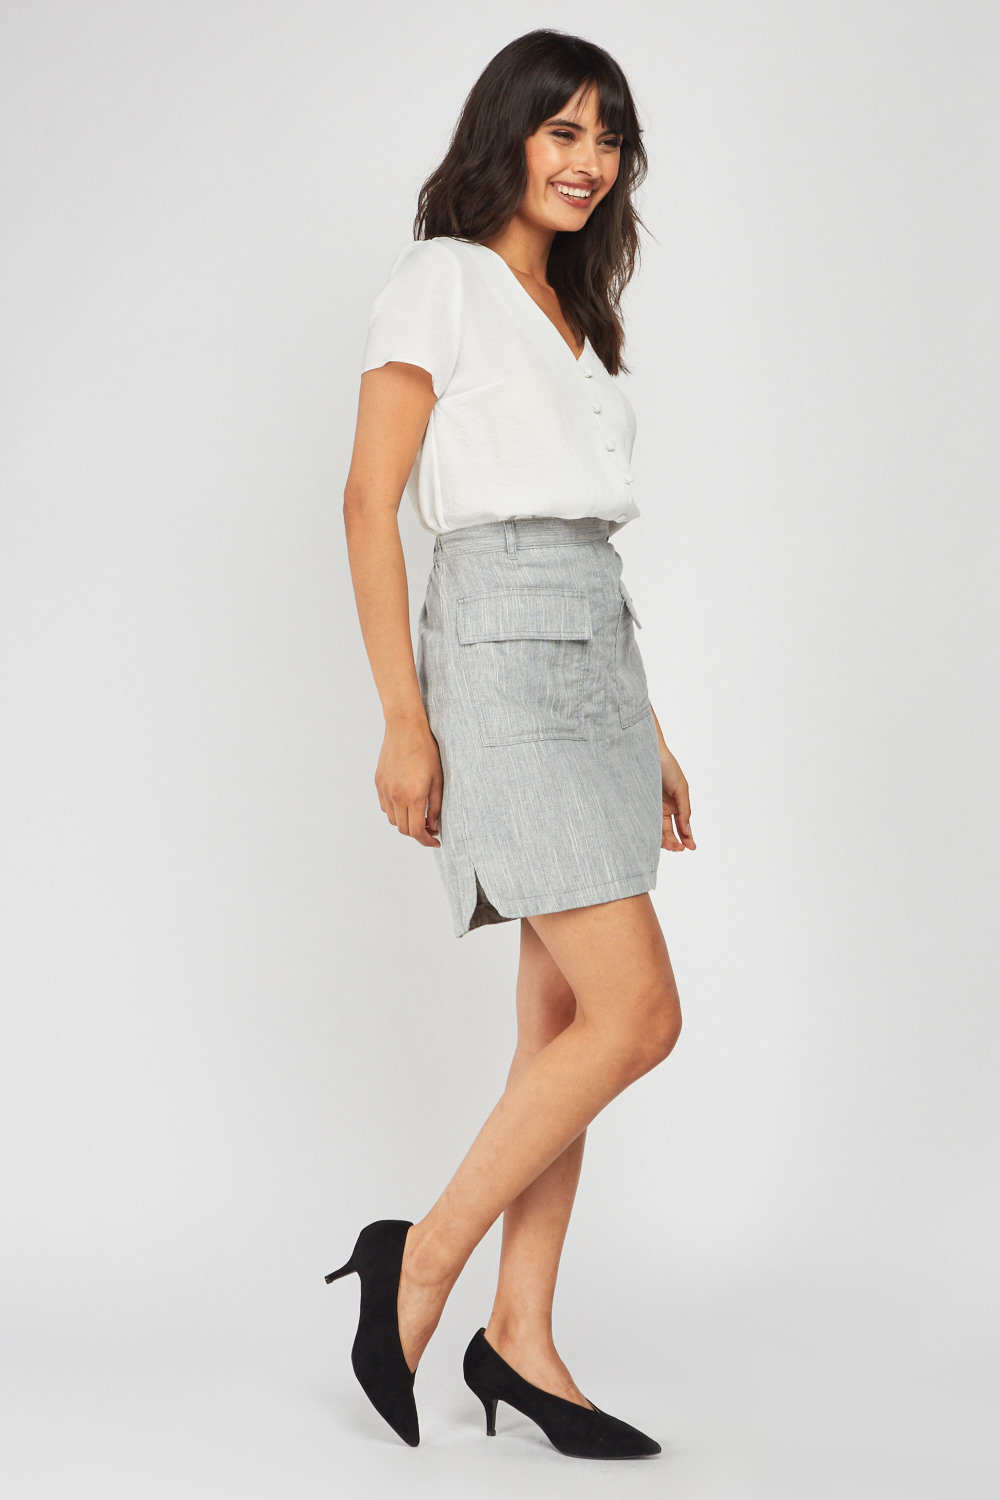 Flap Pockets Front Mini Skirt - Just $7